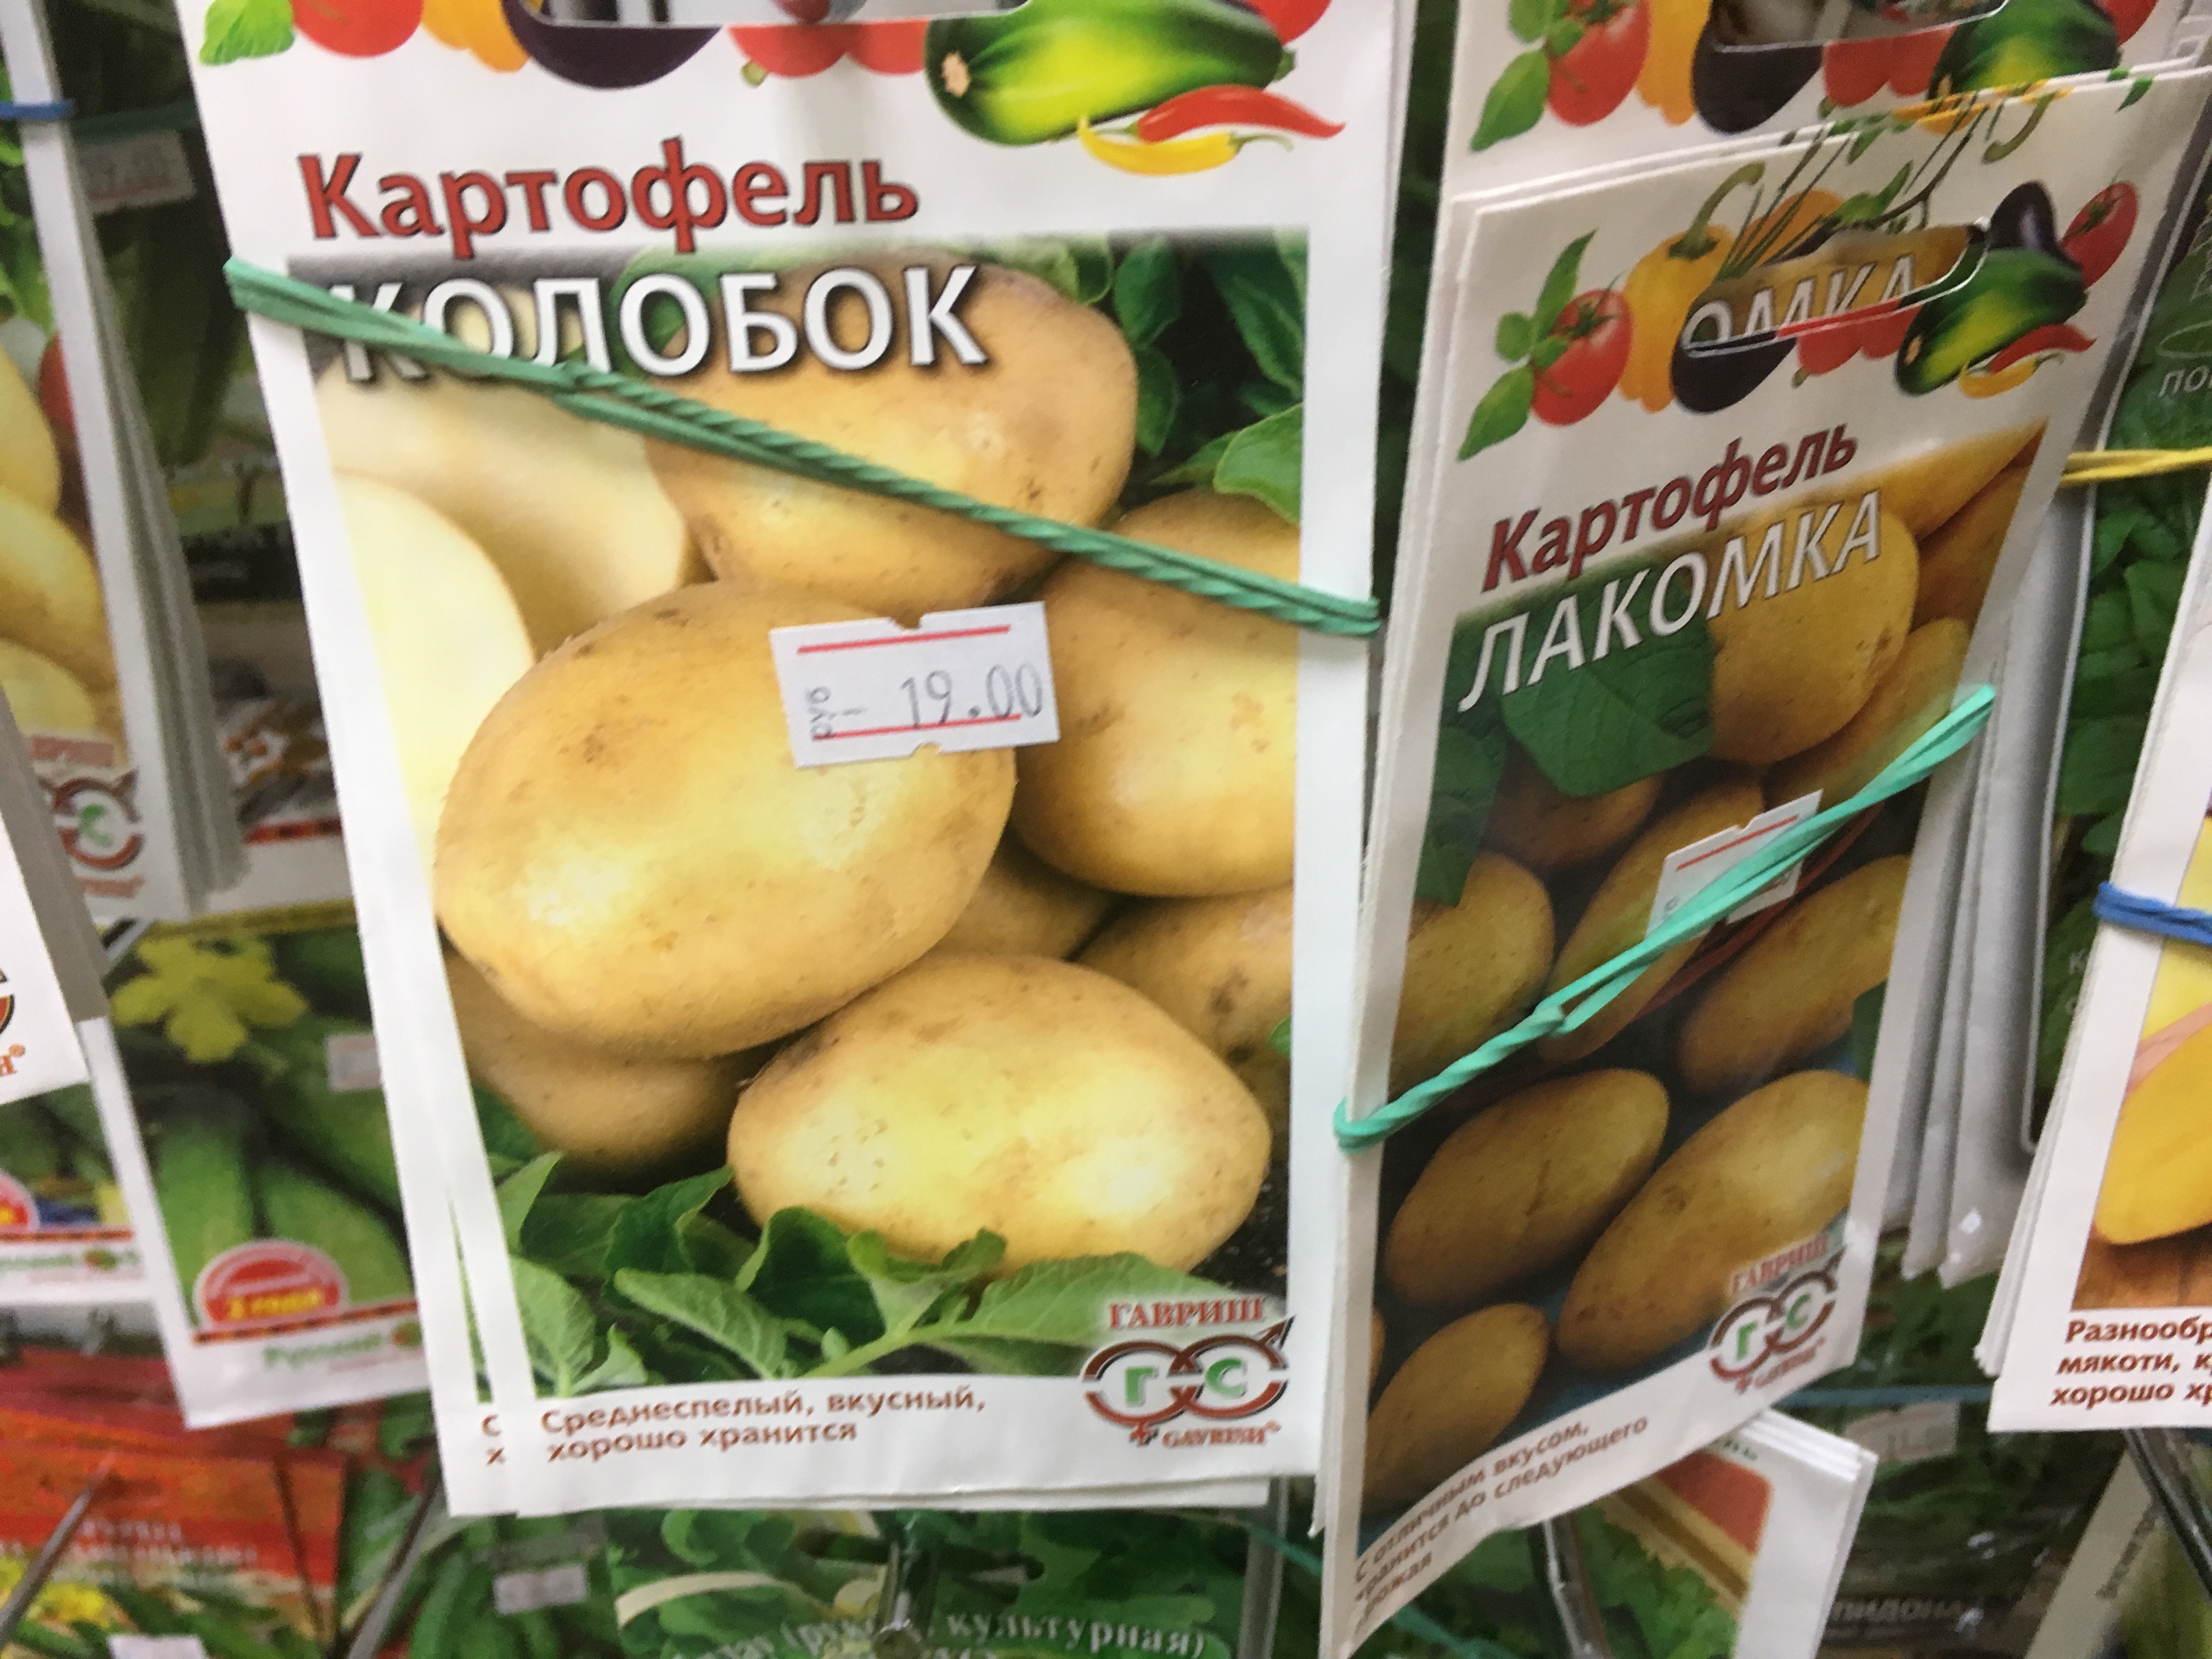 Семена картофеля в пакетах